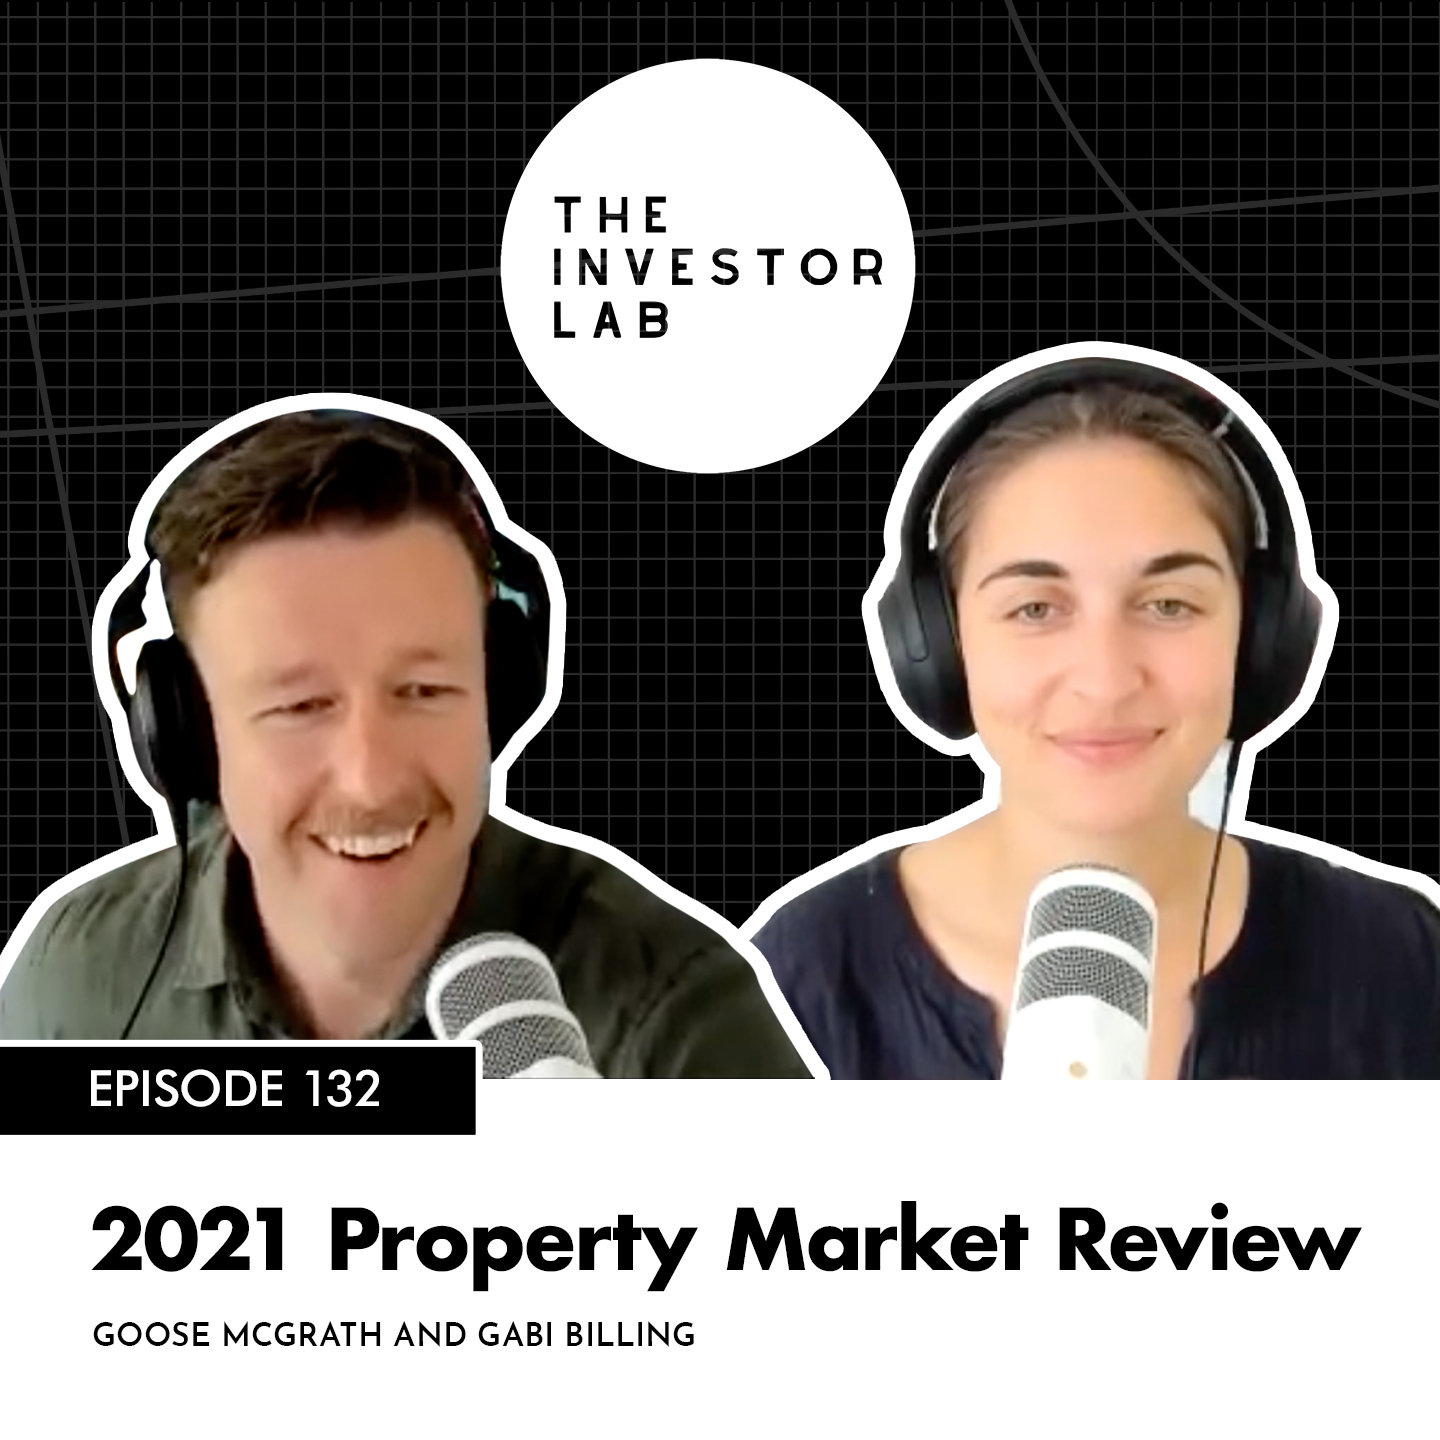 2021 Property Market Review